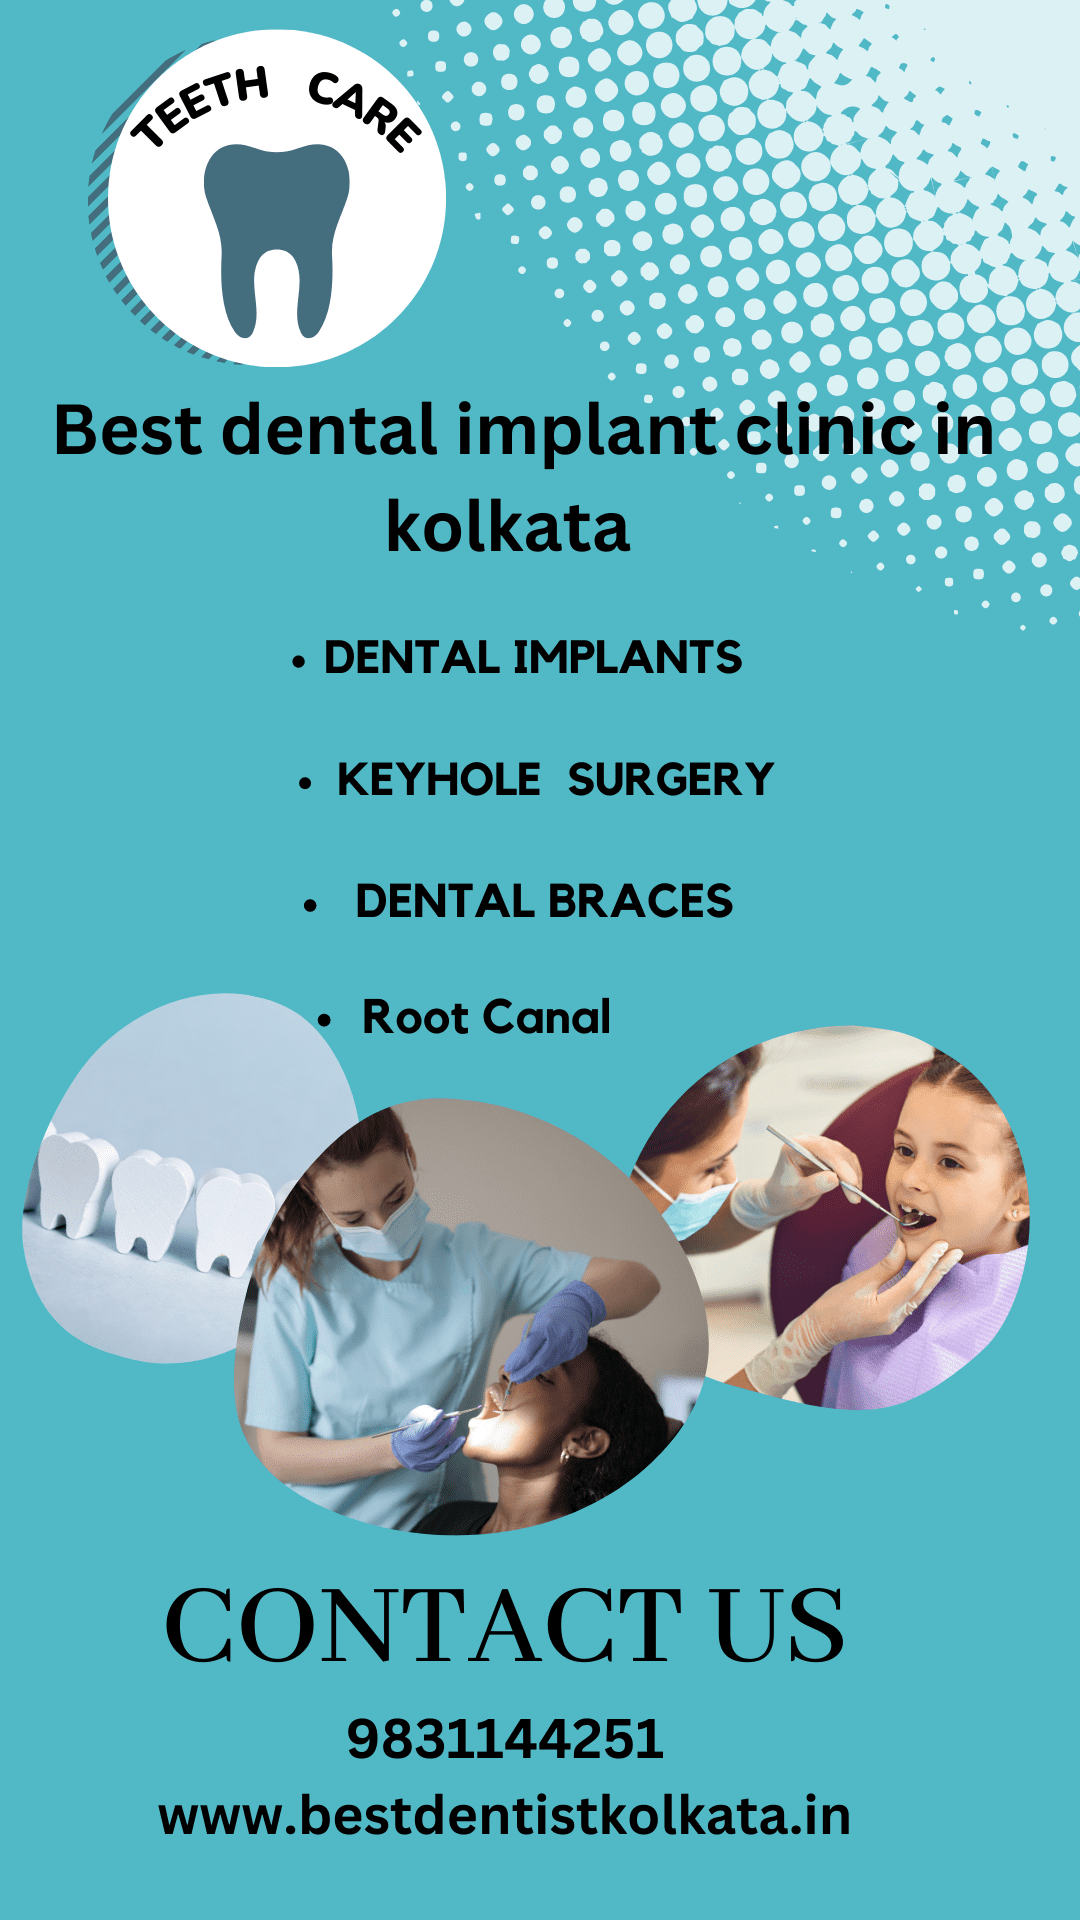 Dr. Purnendu Roy - Your Trusted Surgeon for Gallstone Treatment in Kolkata - Kolkata Health, Personal Trainer